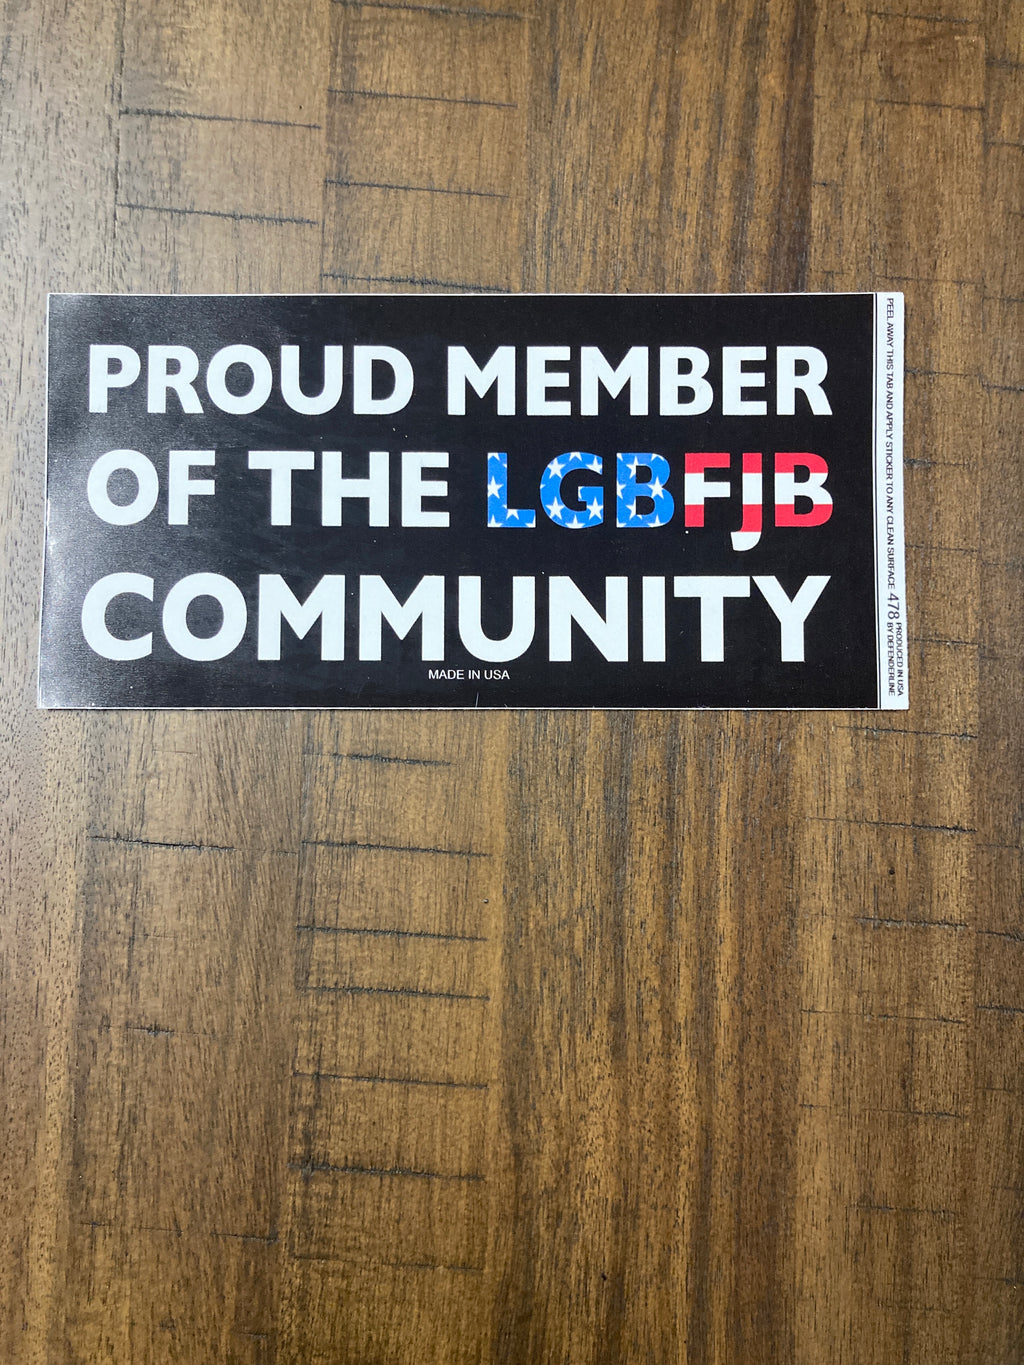 "Proud Member of the LGBFJB Community" Bumper Sticker